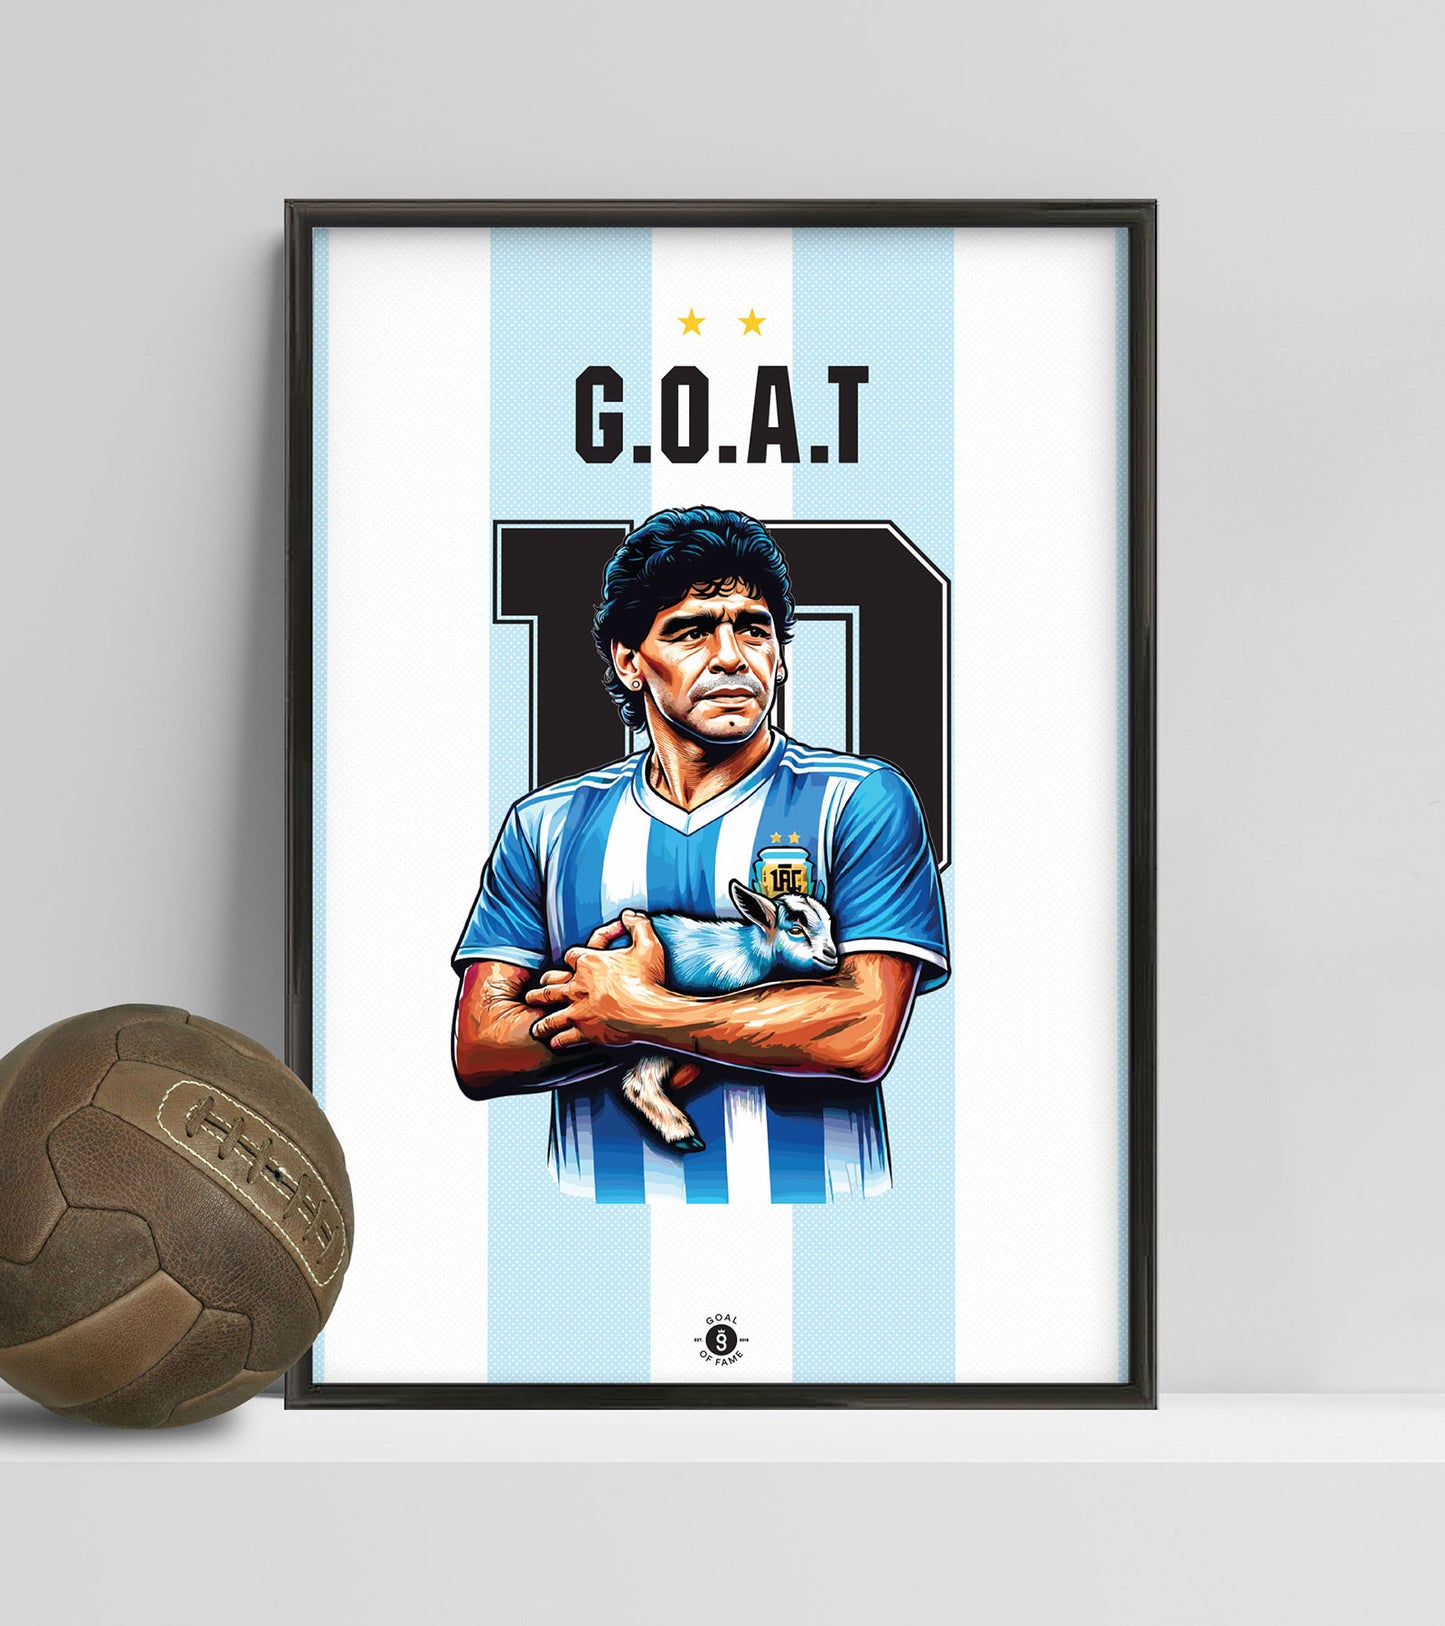 Maradona is the G.O.A.T.